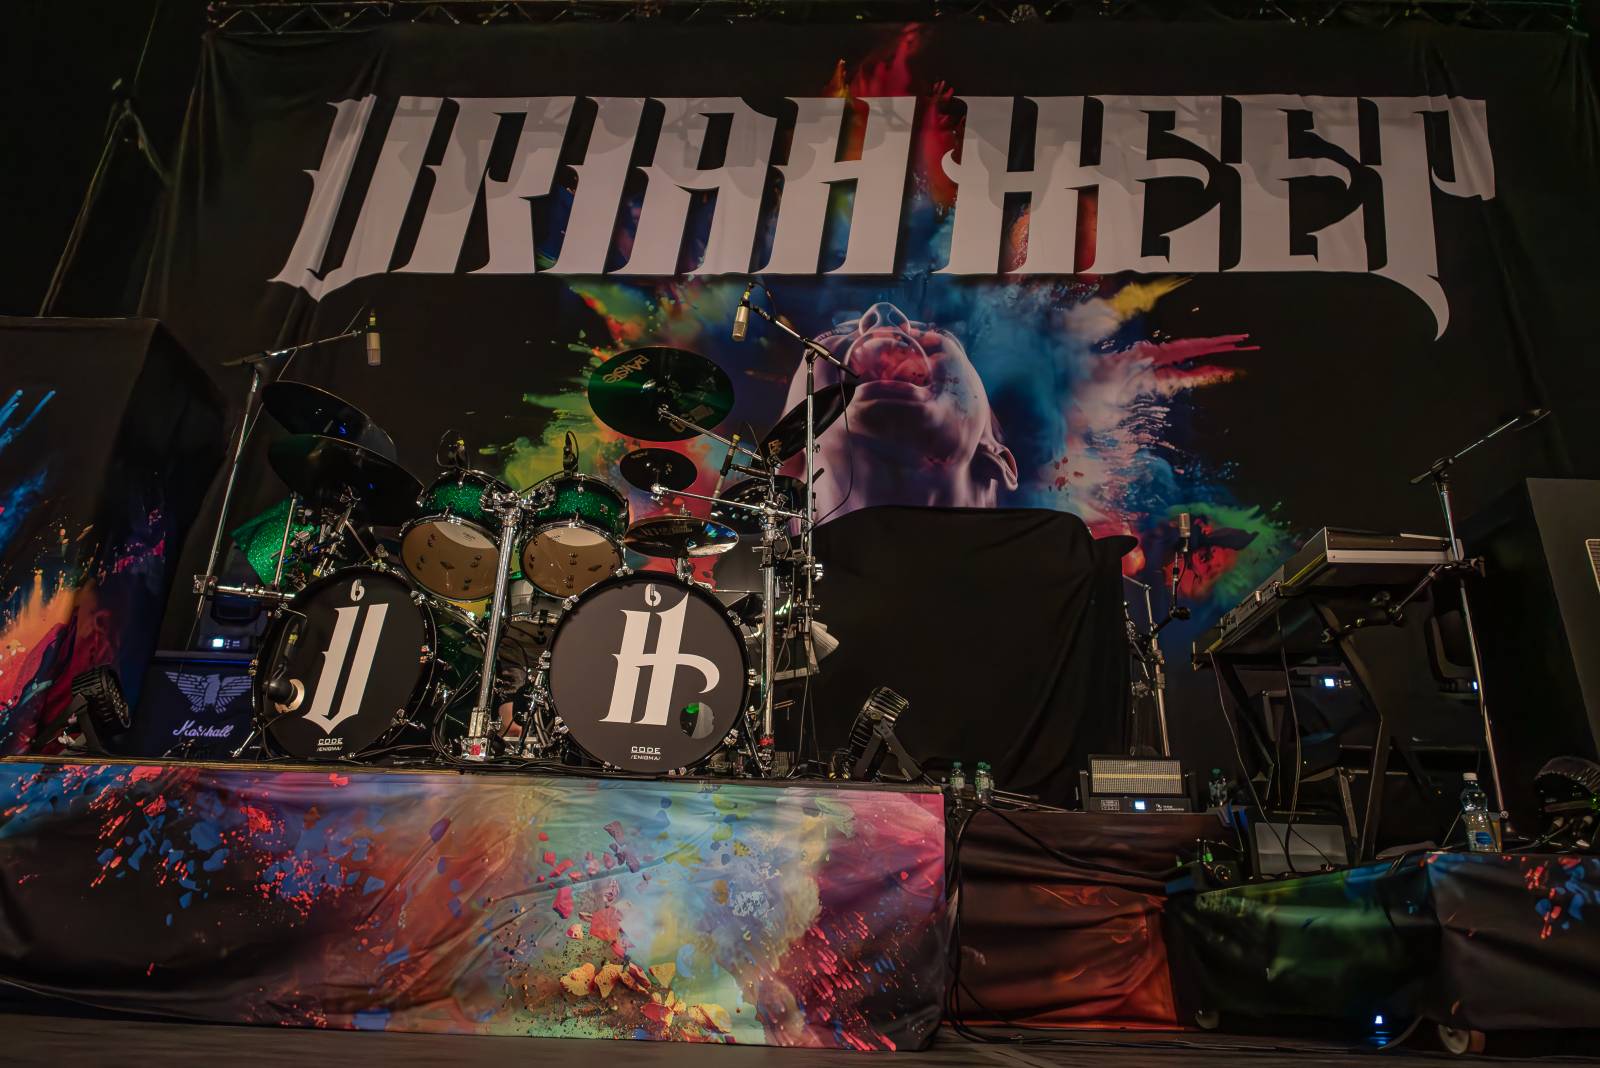 V Praze se setkaly legendy. V O2 areně vystoupili Judas Priest, Saxon a Uriah Heep